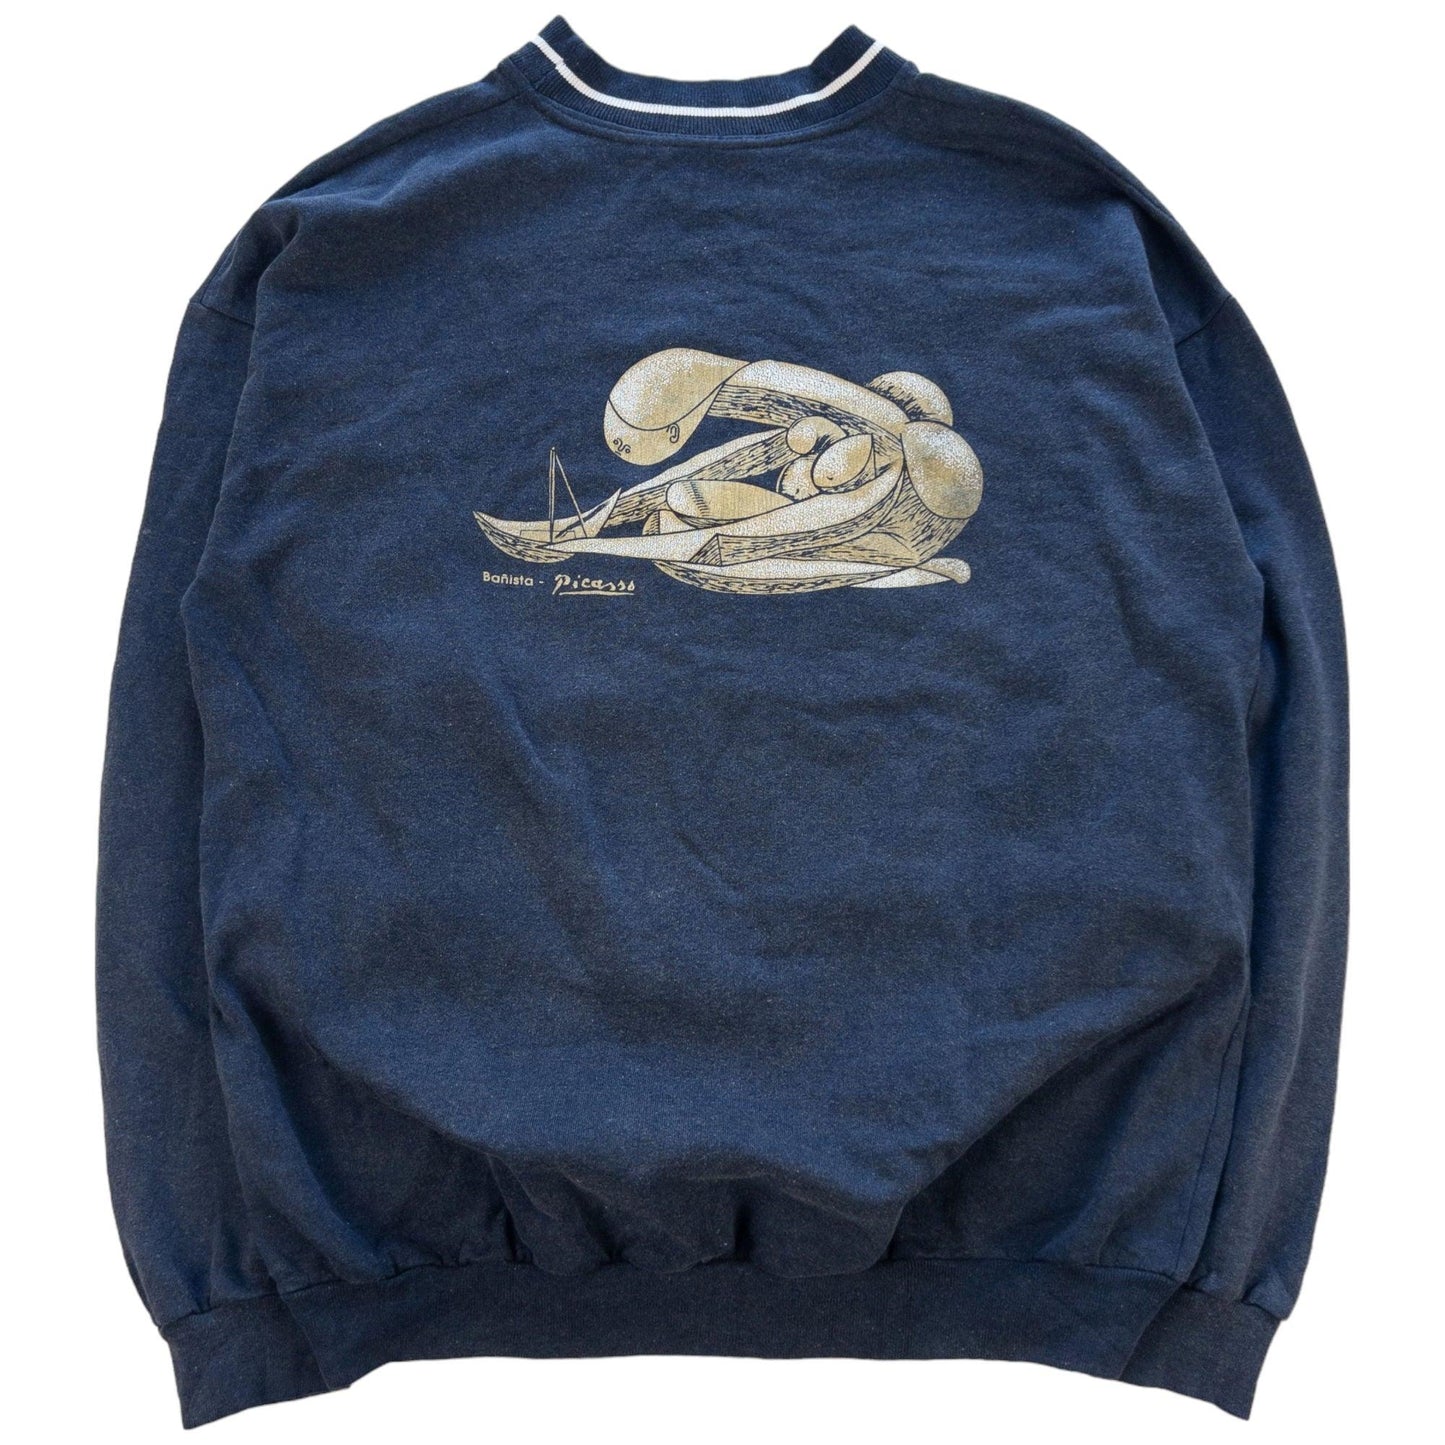 Vintage Picasso Art Sweatshirt Size M - Known Source